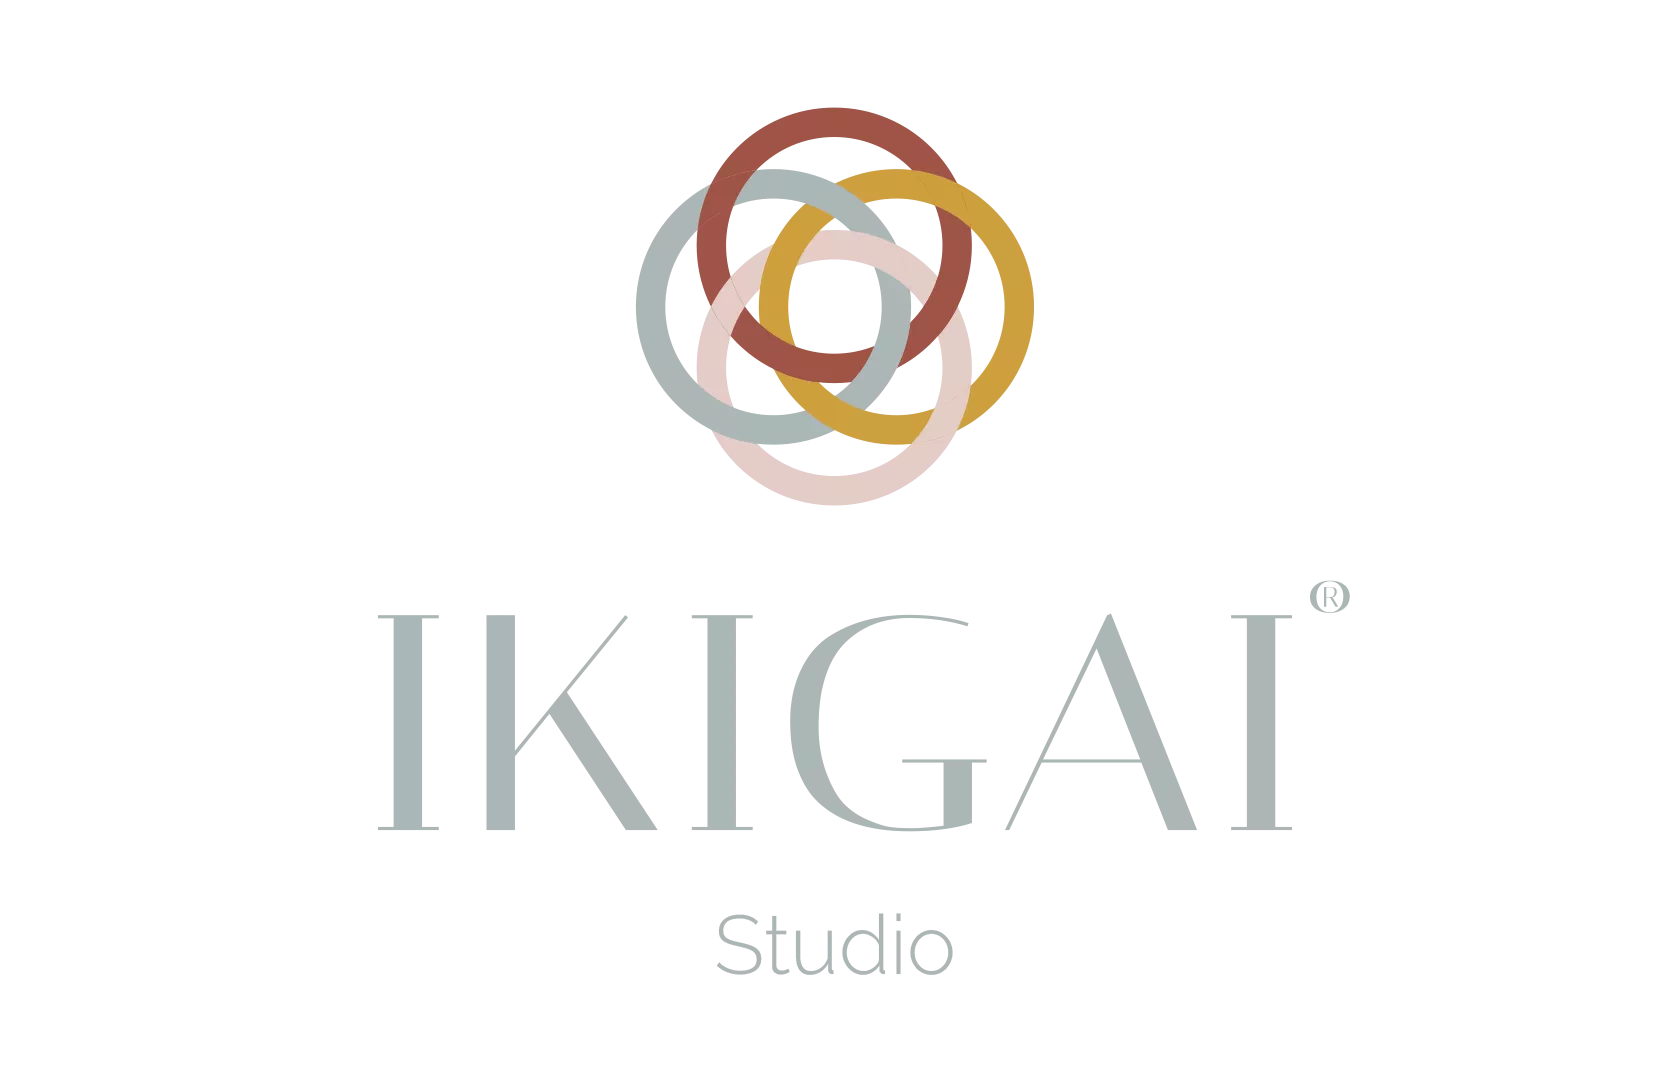 IKIGAI Studio